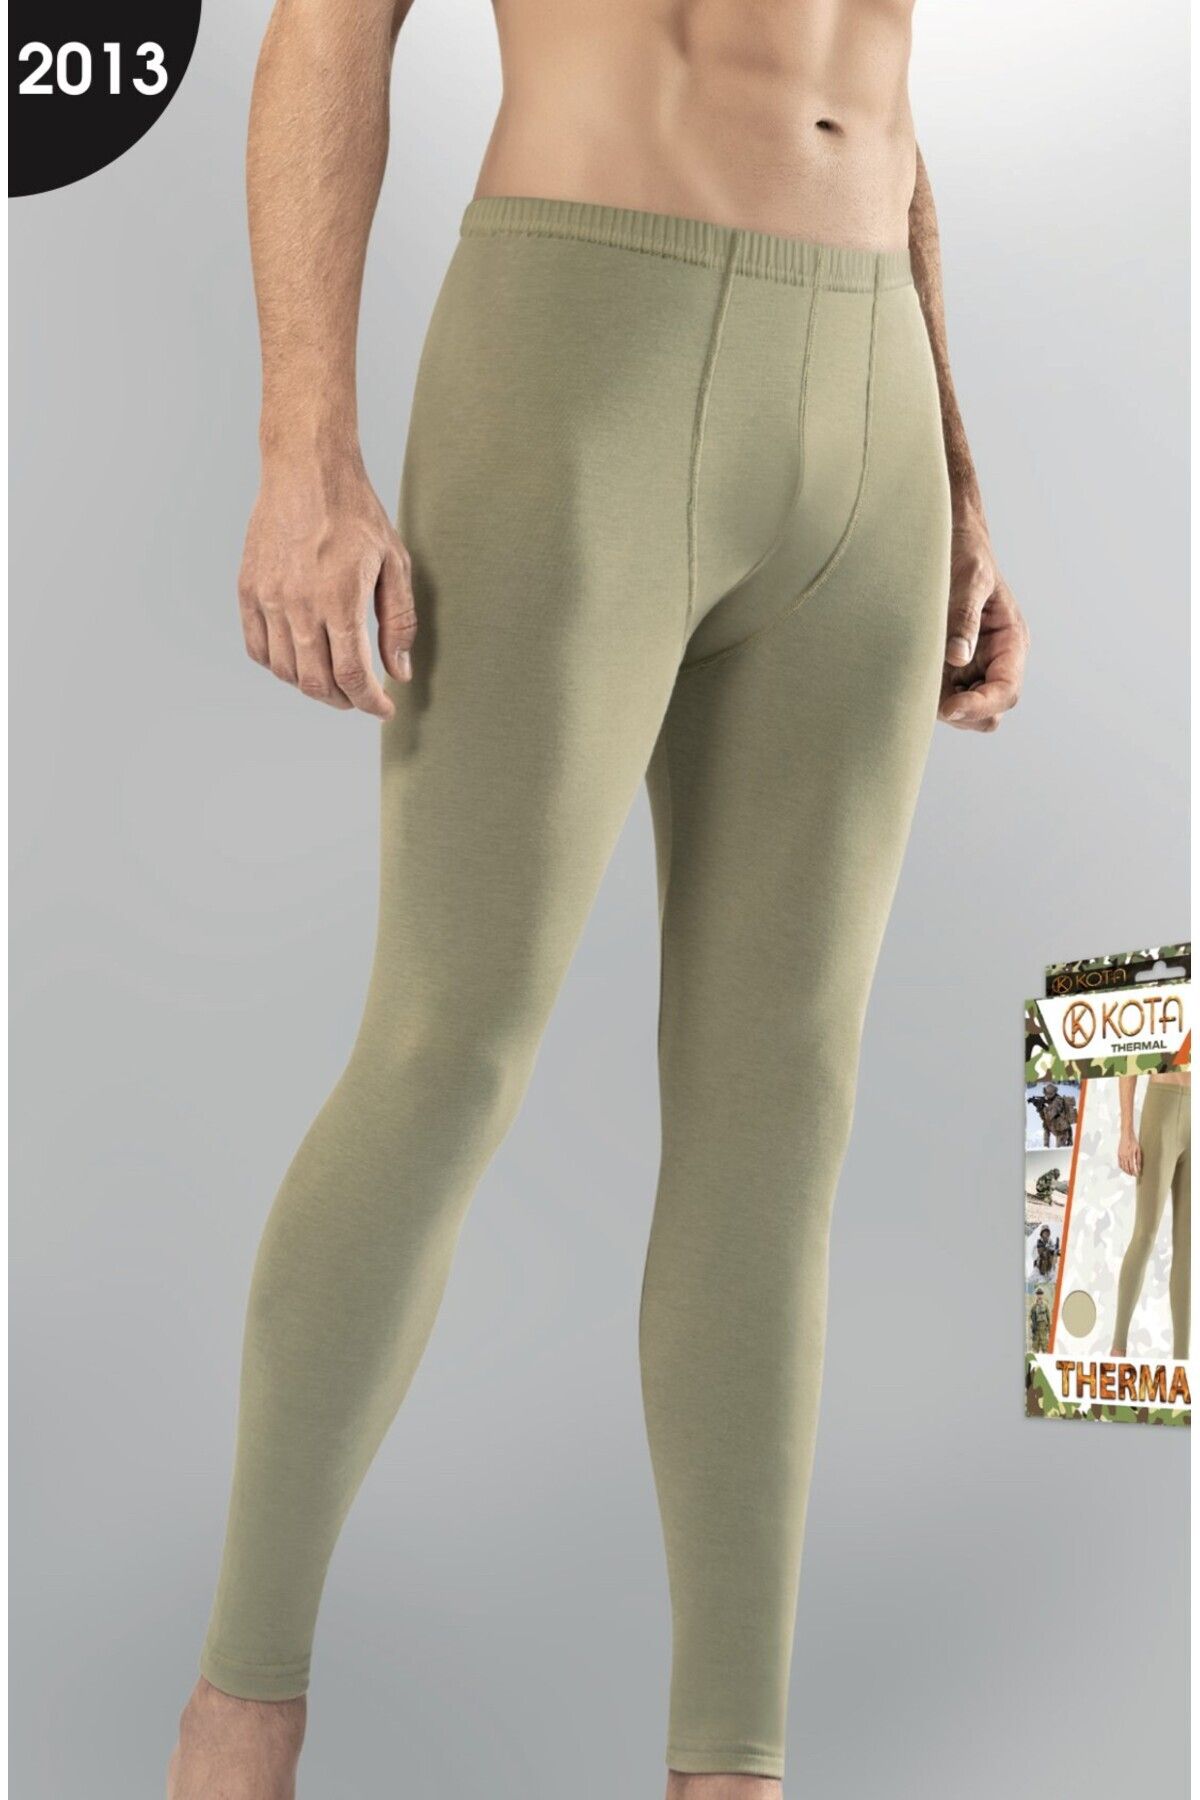 CSN CASANO CSN-Thermal Men's Thermal Underwear Tights